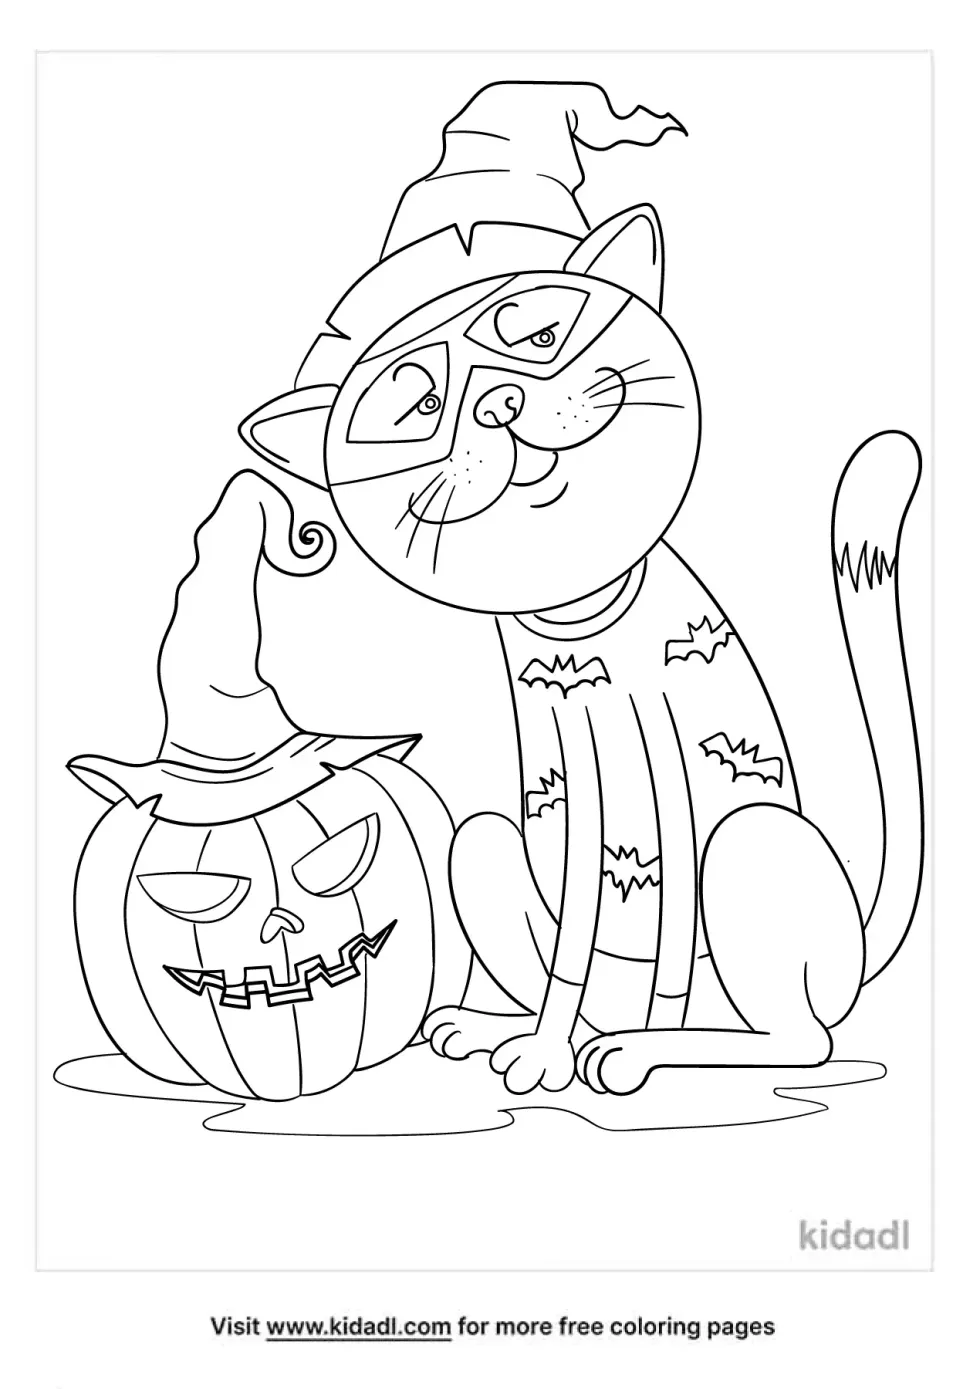 Halloween Animal Coloring Page